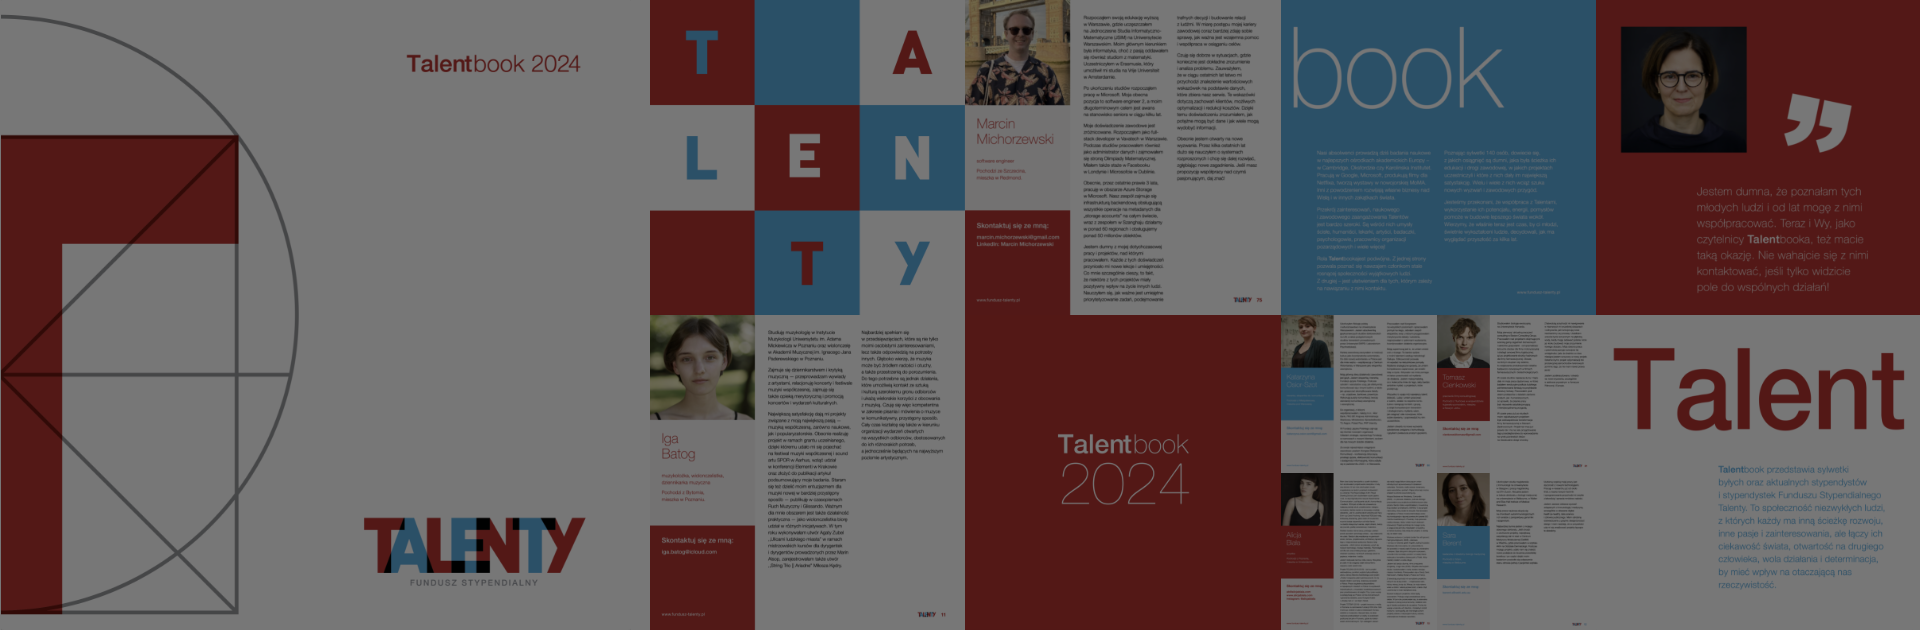 Talentbook 1920x630